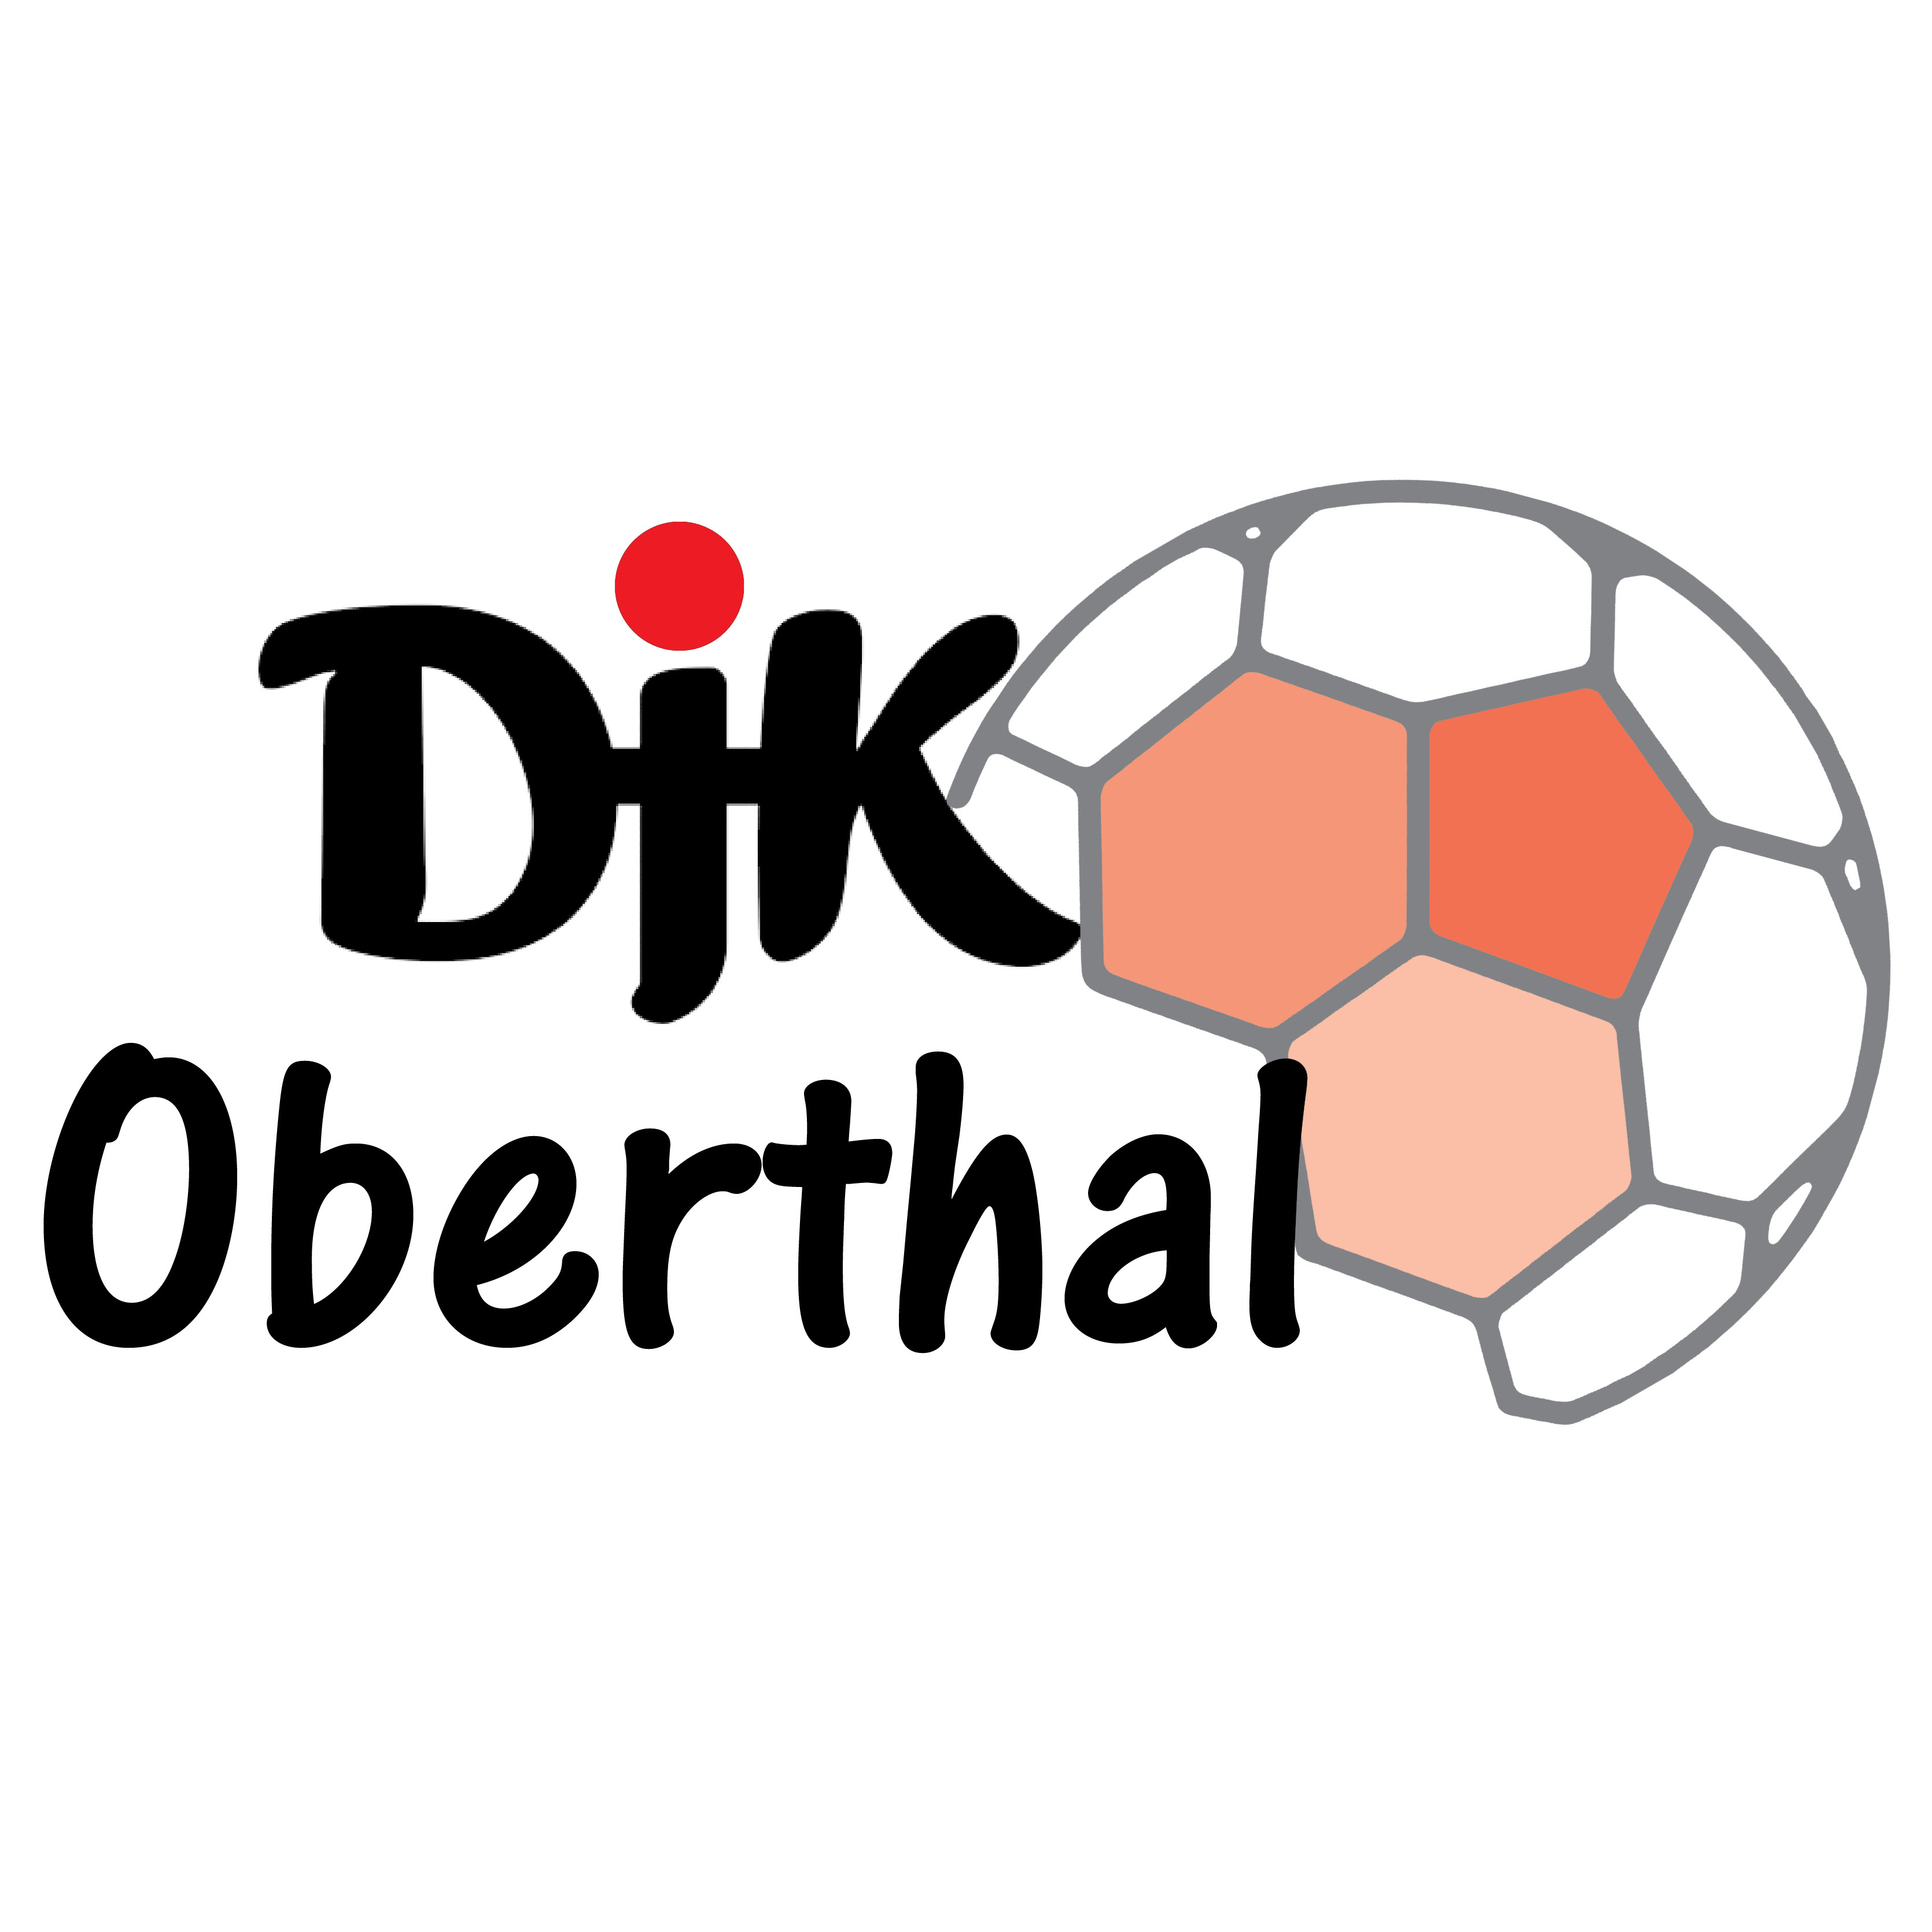 DJK Oberthal